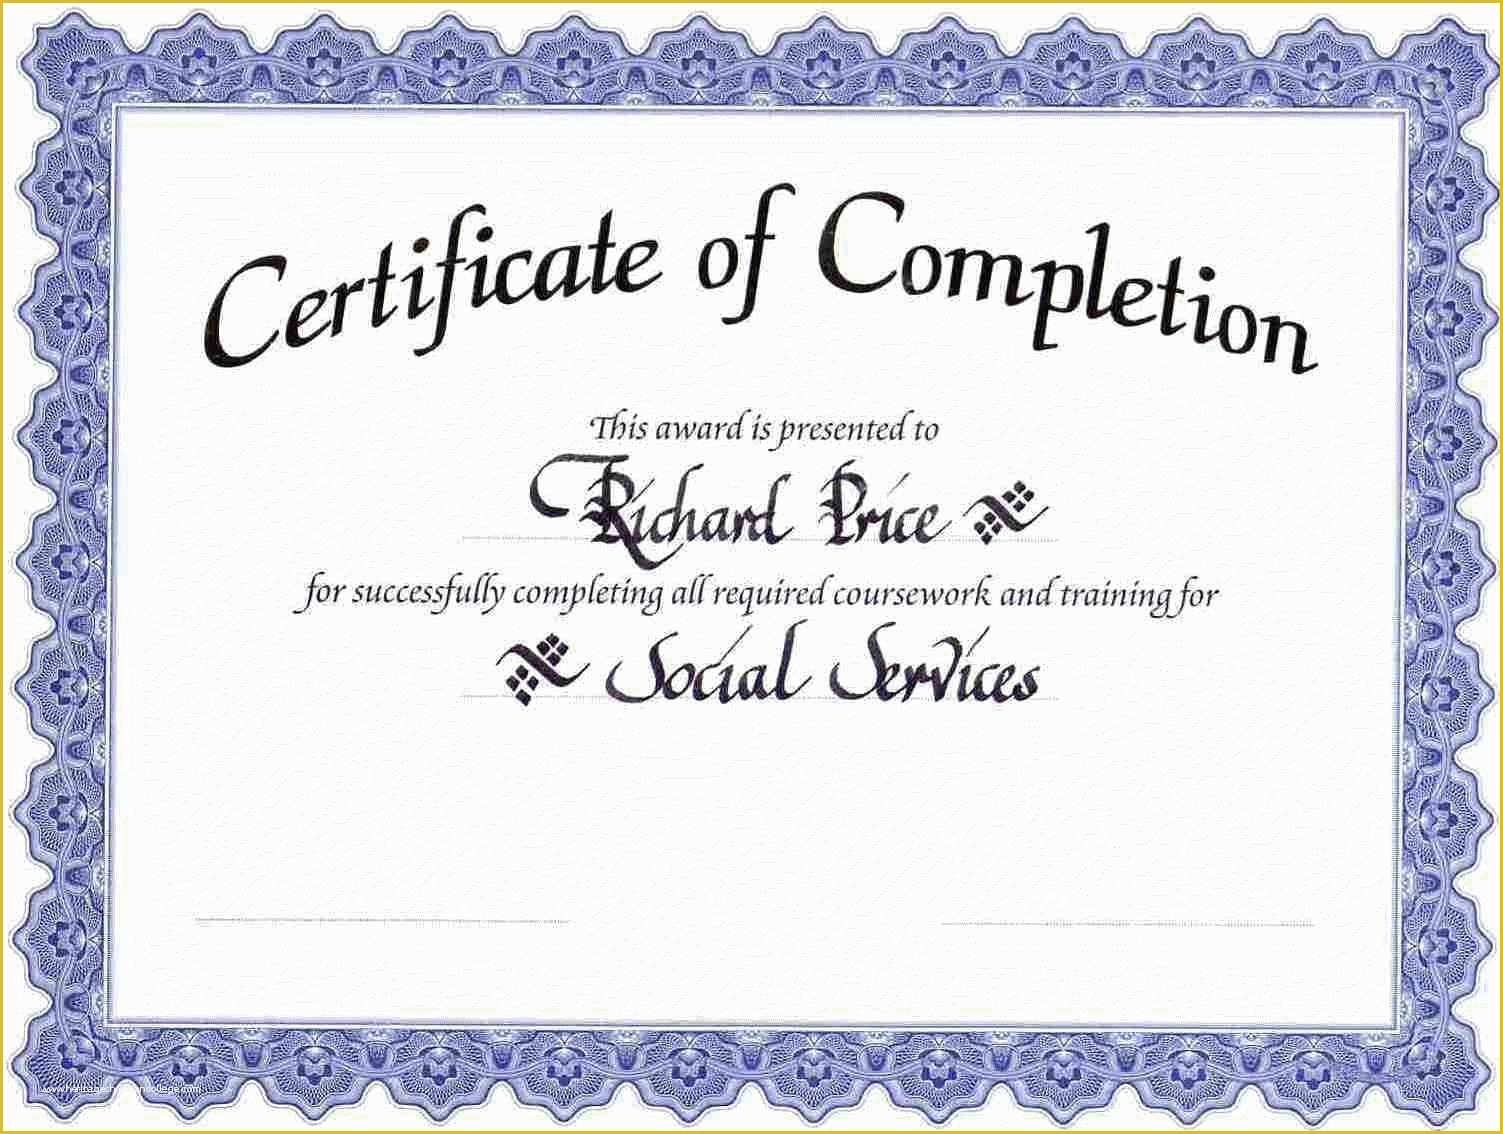 Award Certificate Template Free Of Blank Award Certificate Templates With Update Certificates That Use Certificate Templates